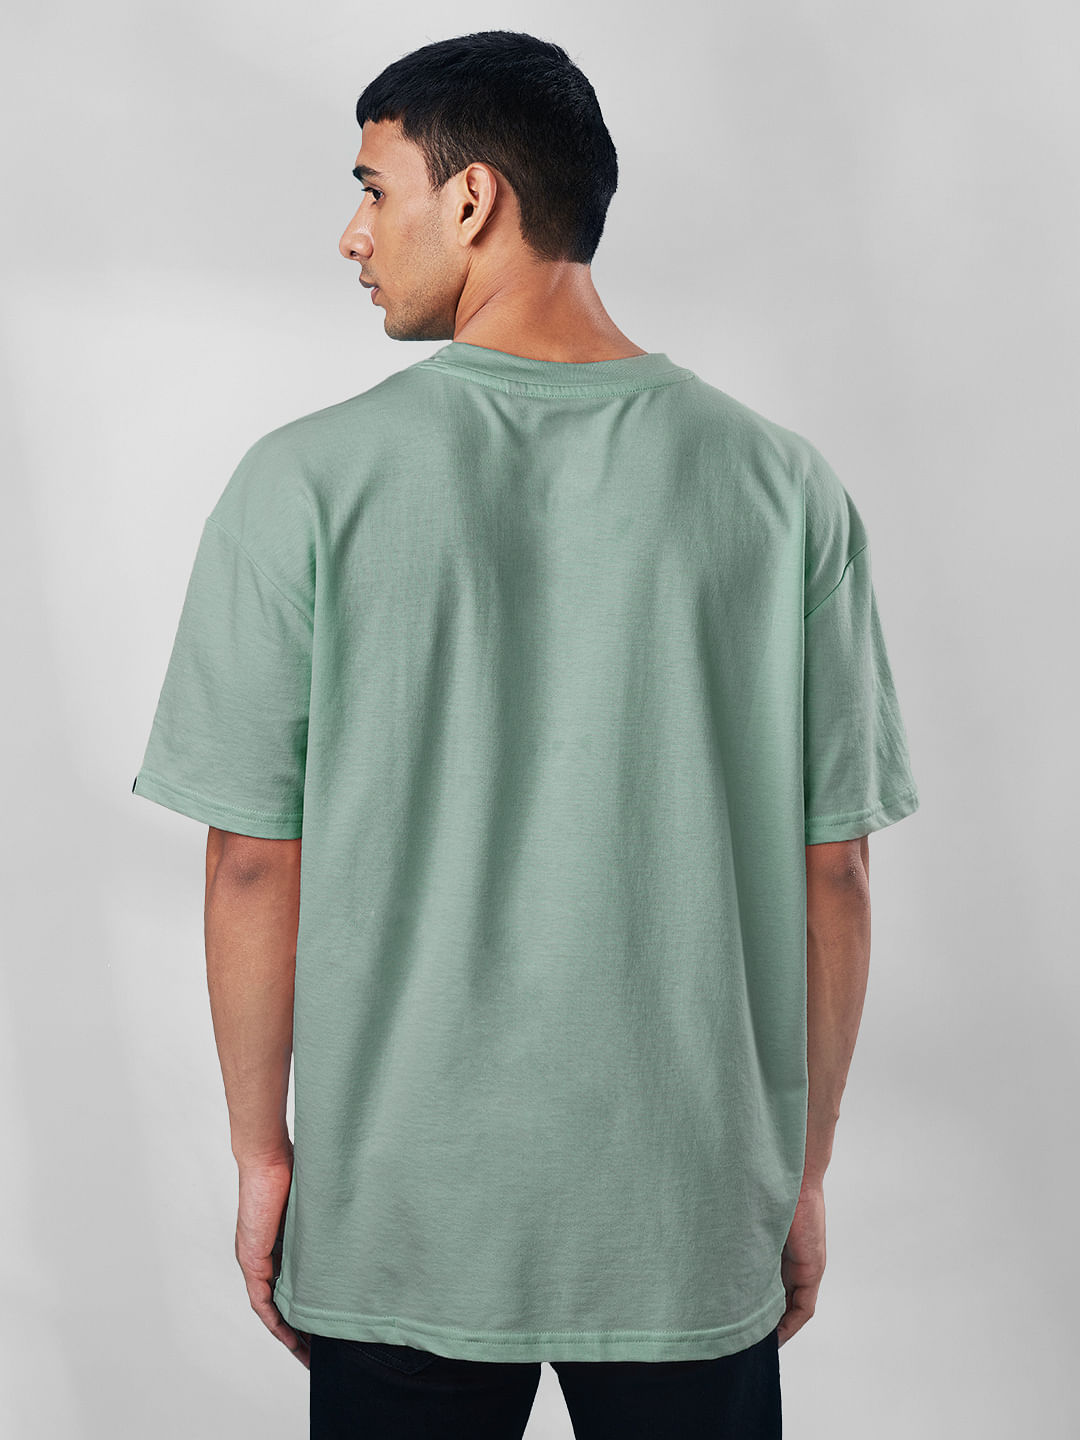 Buy Solids Oversized Sage Green T-shirt Online.